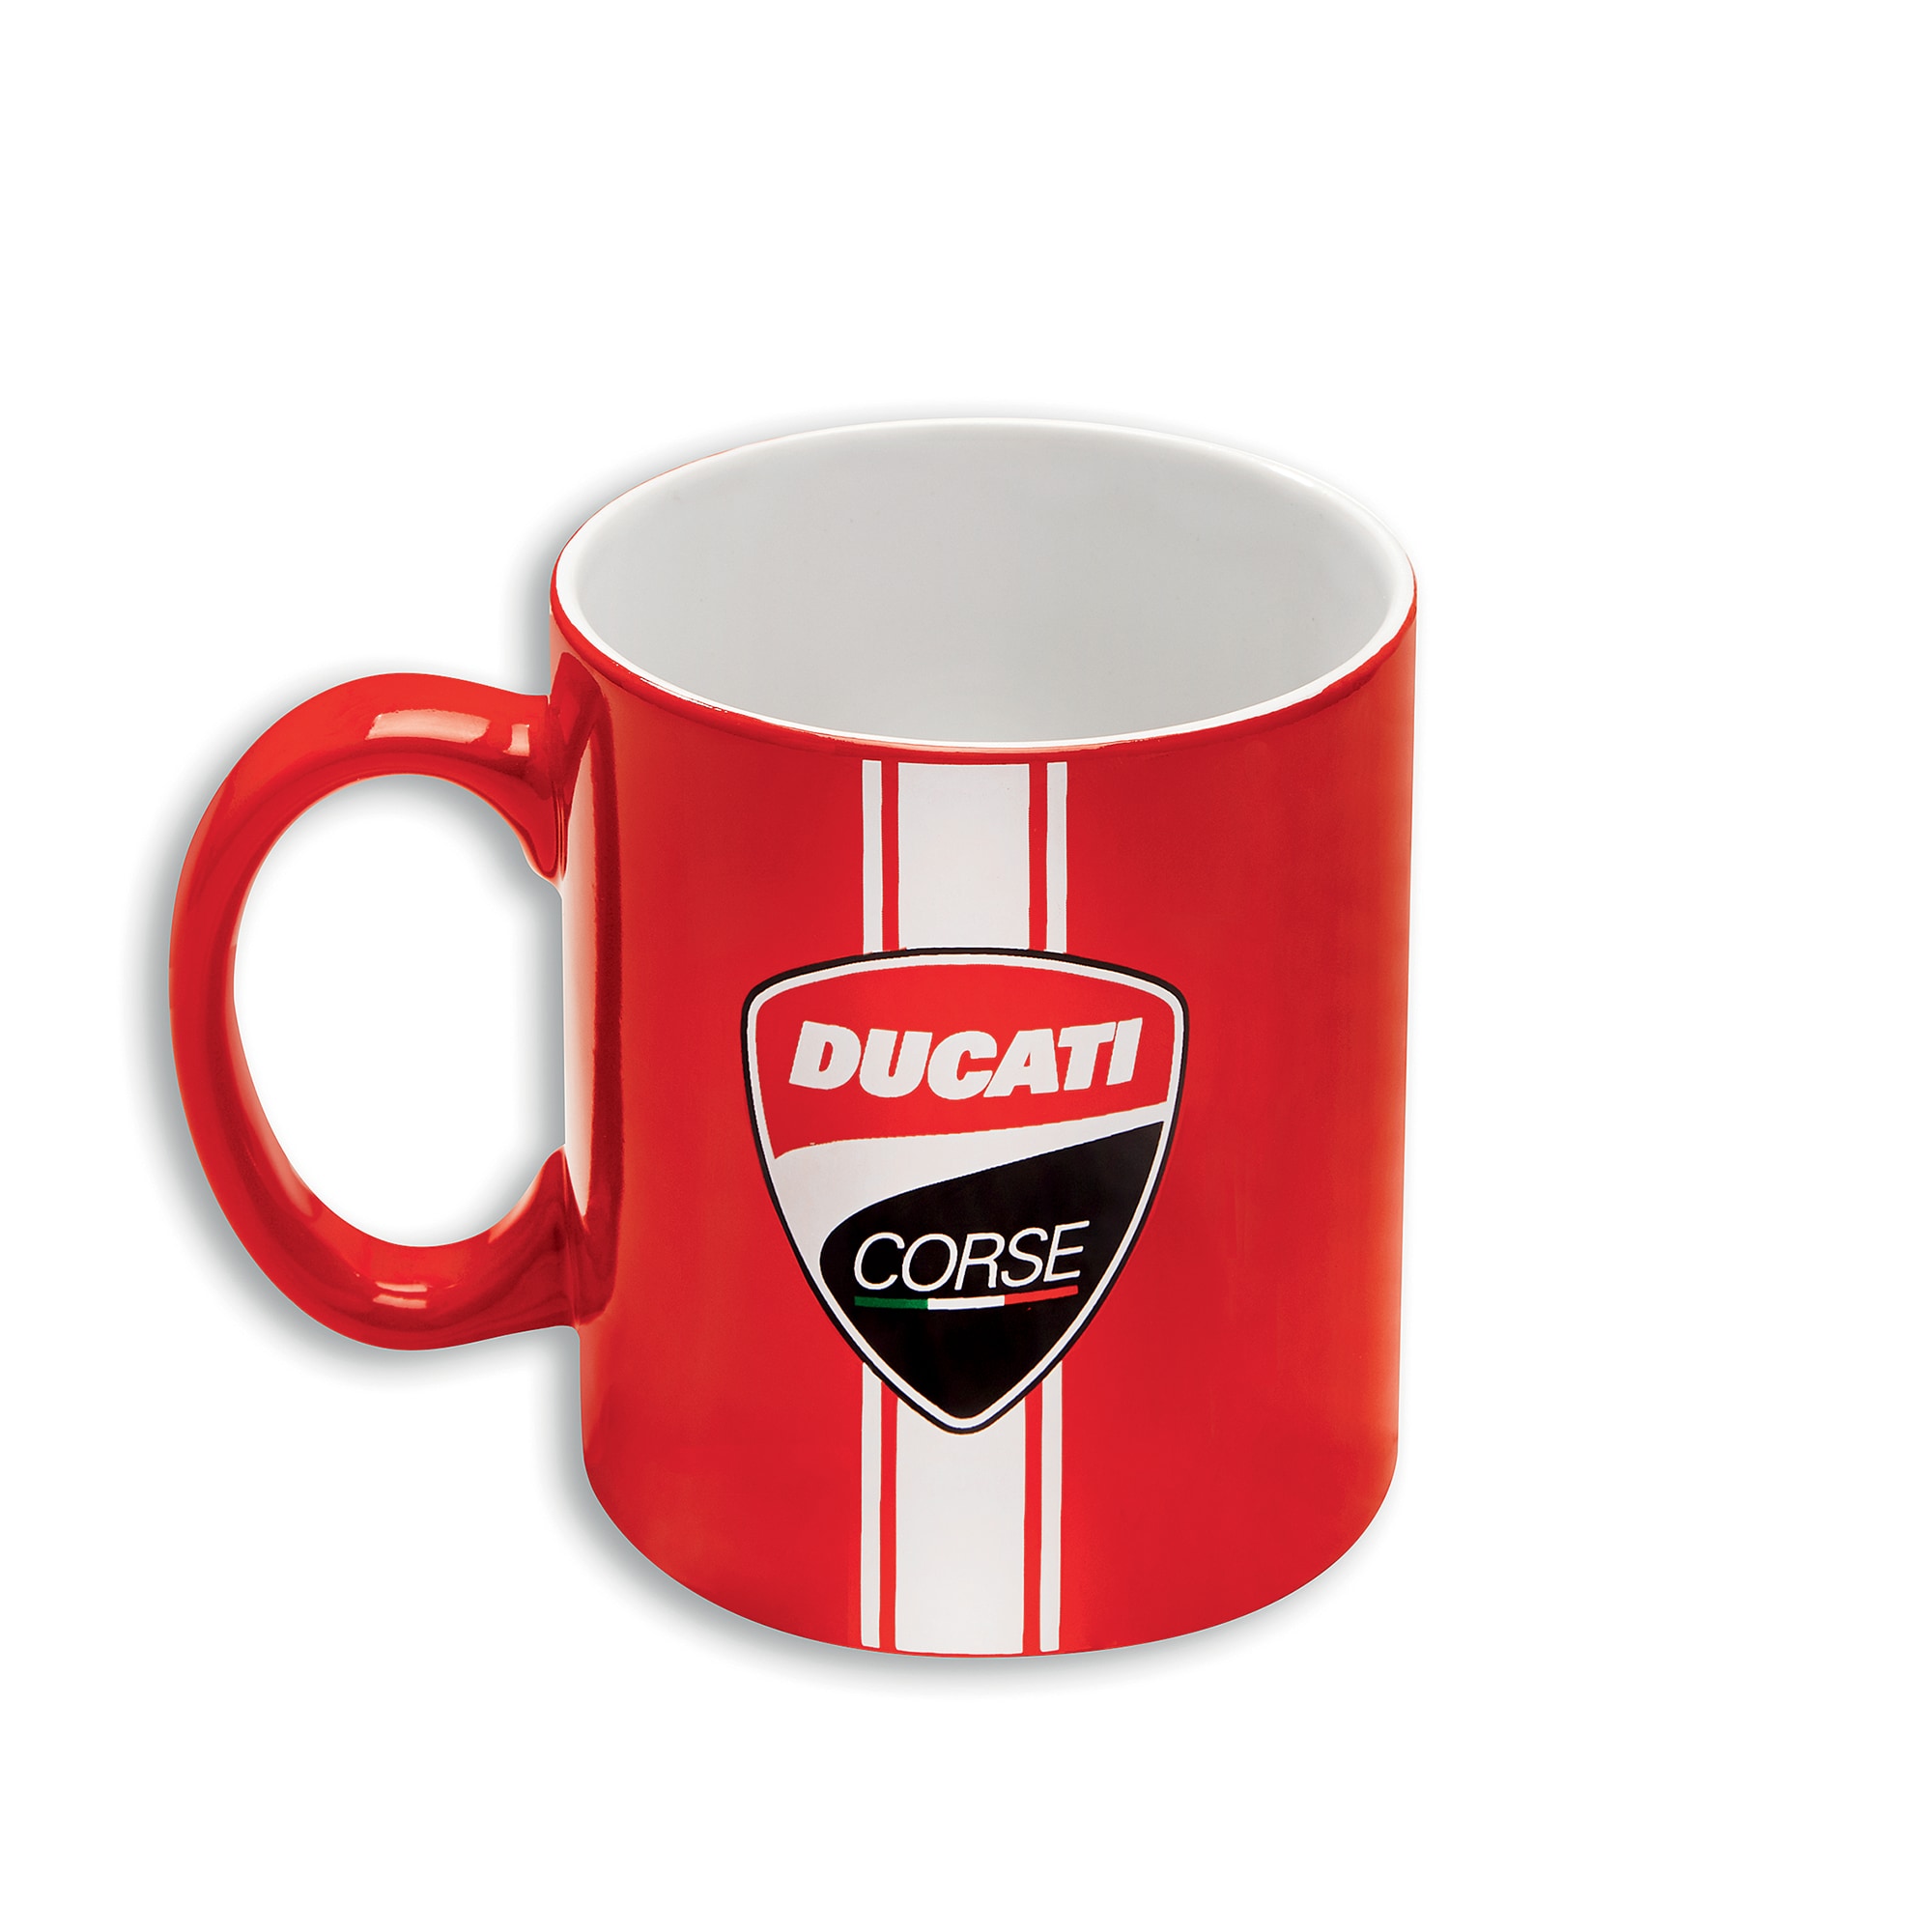 Ducati Corse - Mug